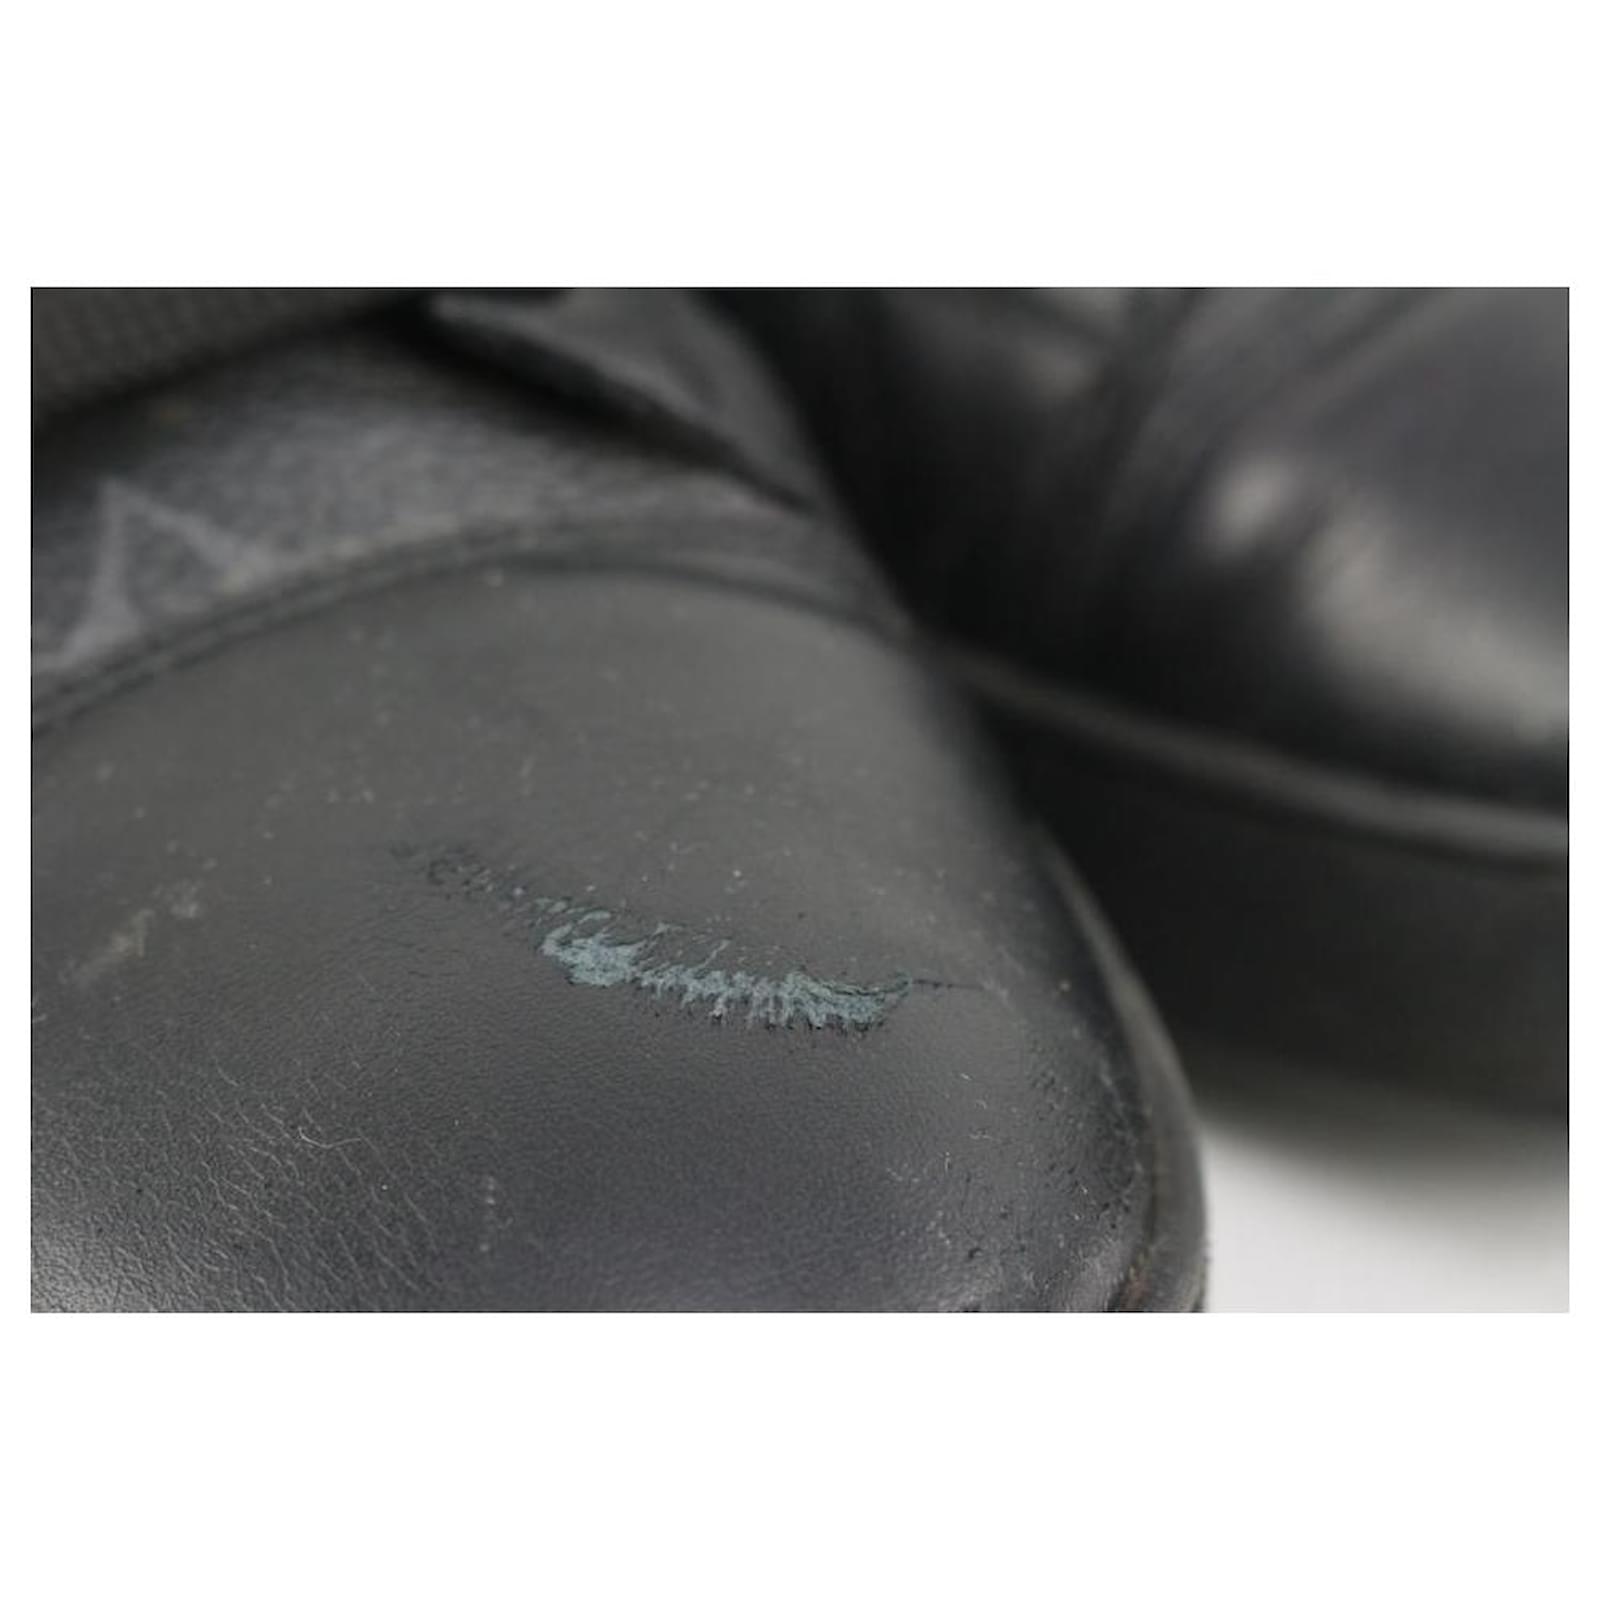 Louis Vuitton Men's Black Leather Luxembourg Sneaker – Luxuria & Co.